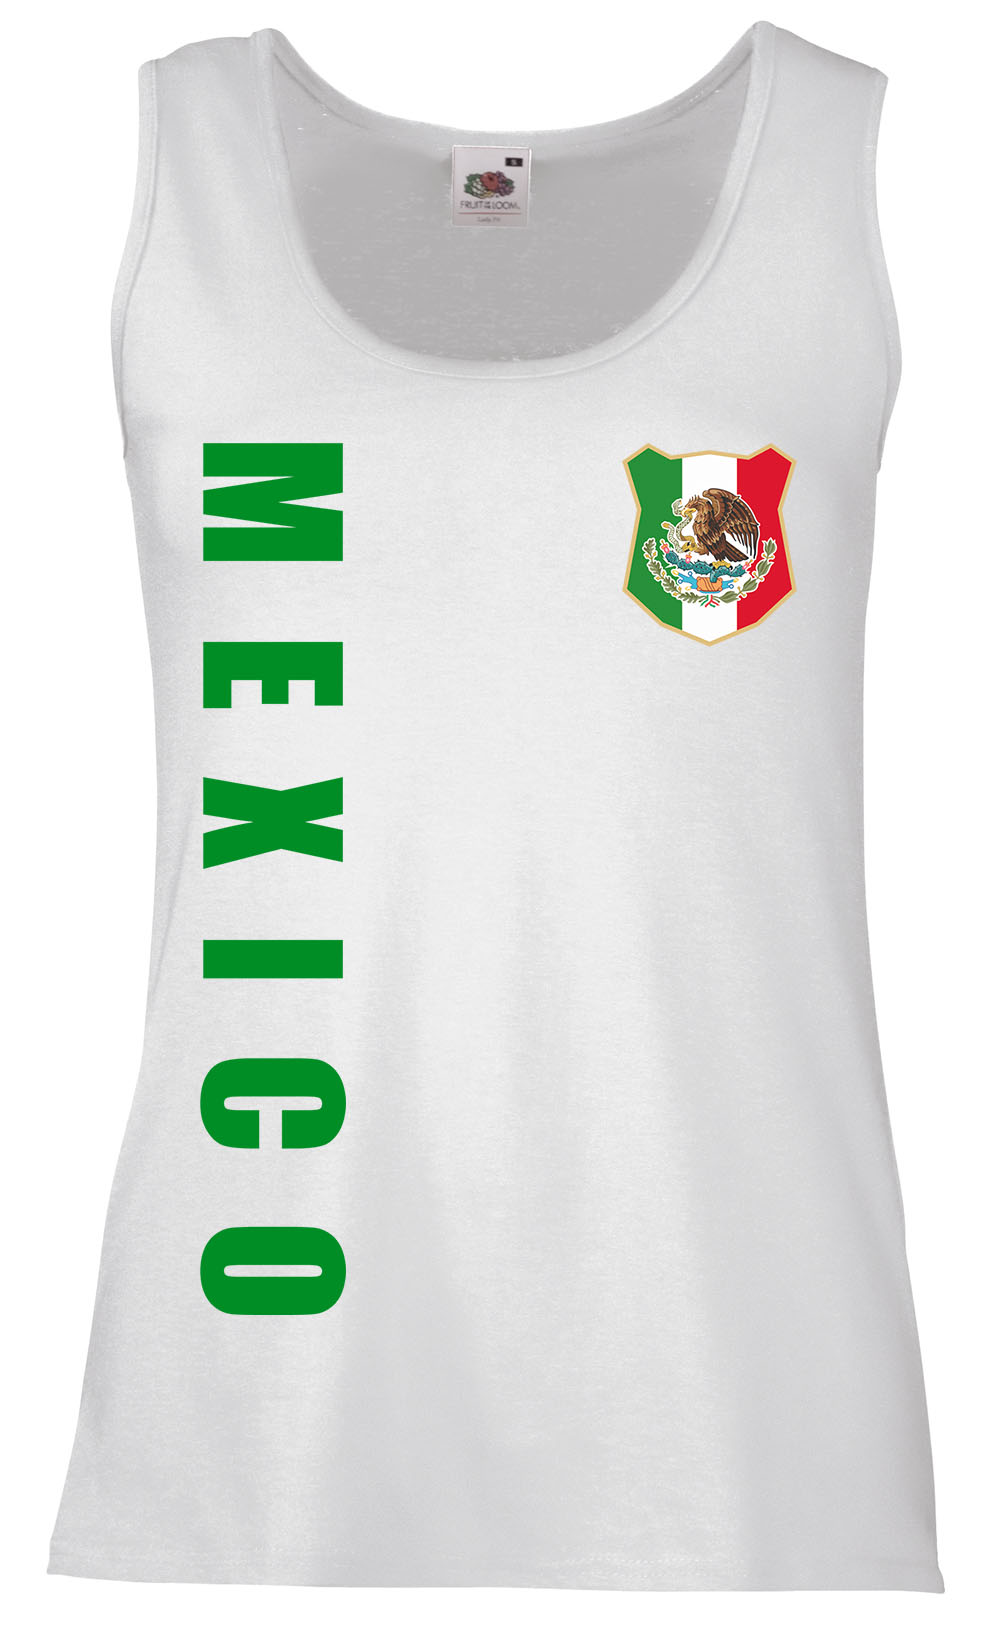 Mexiko Mexico Damen Trikot Fanshirt Top Shirt WM 2018 Name Nummer 